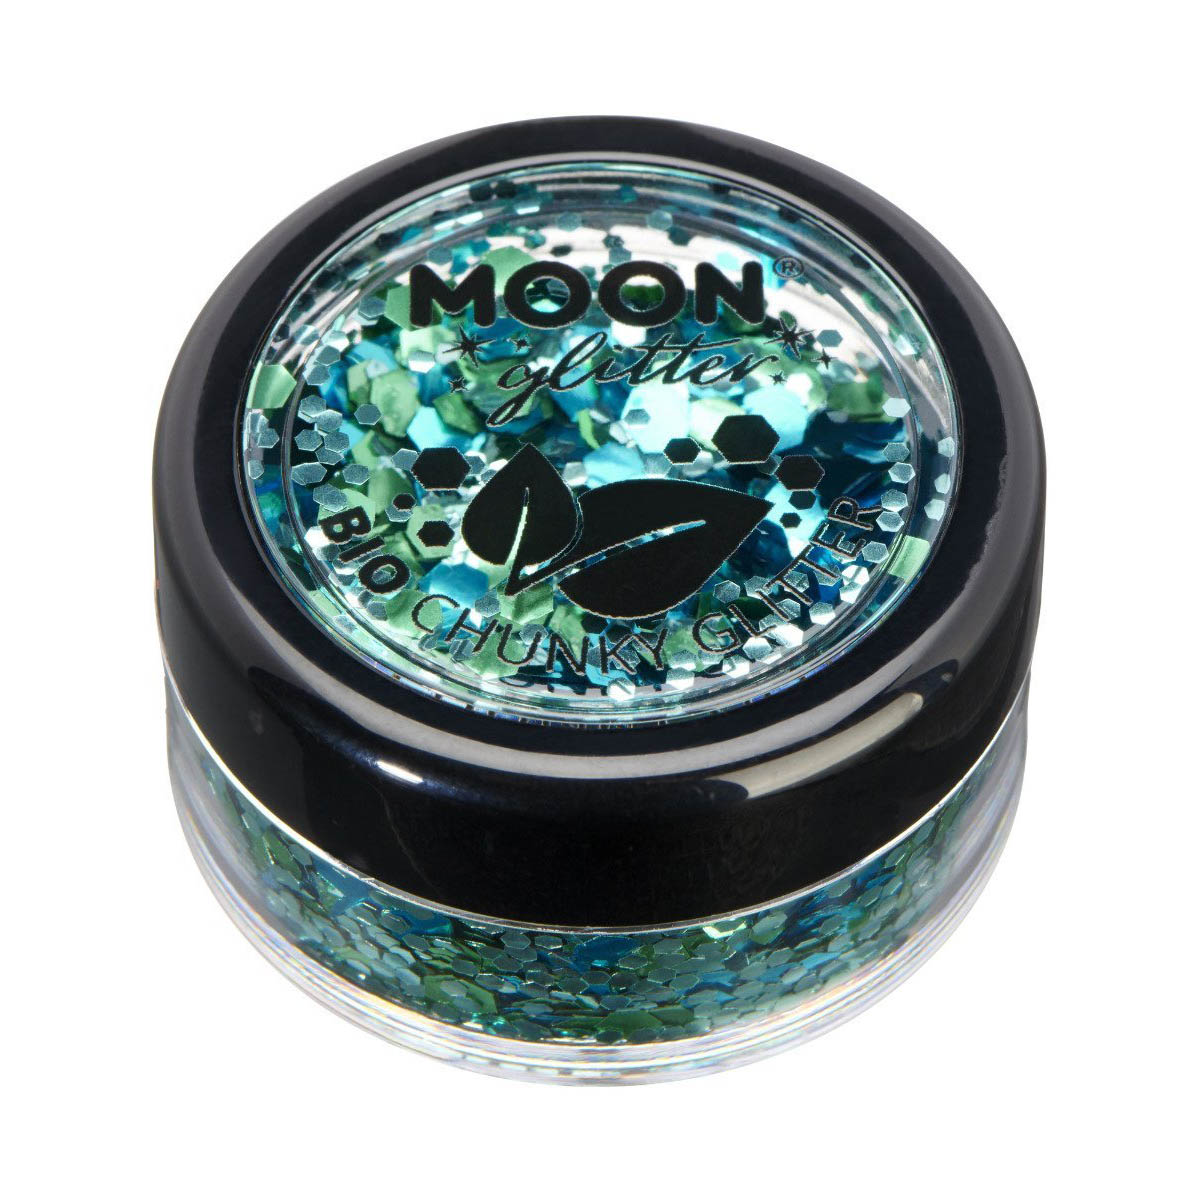 Moon glitter bio chunky mix 3g Aquarium